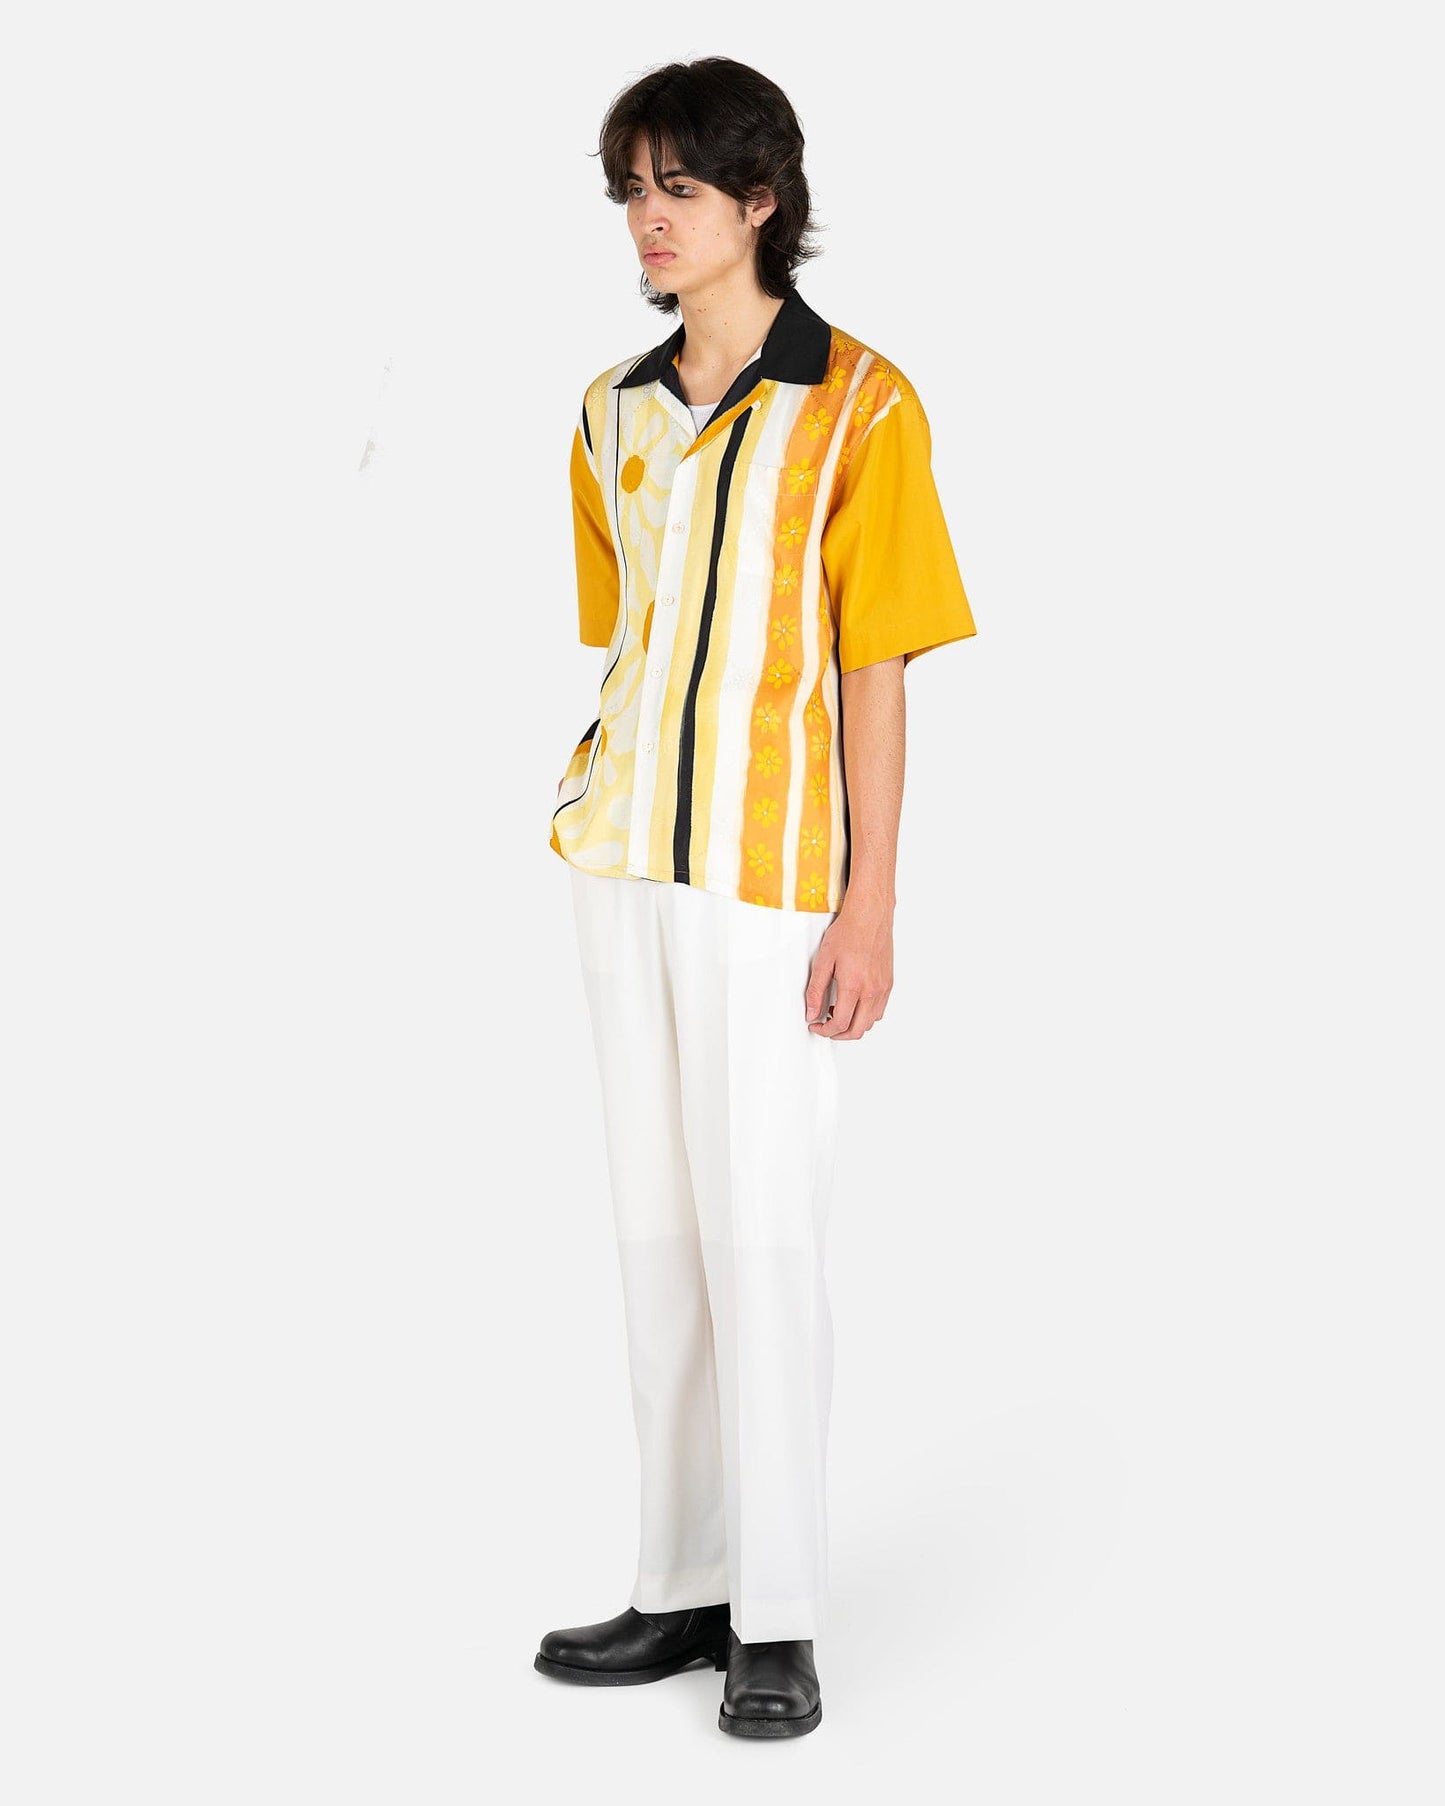 Marni Men's Shirts Patchwork Viscose Jacquard Shirt in Gold